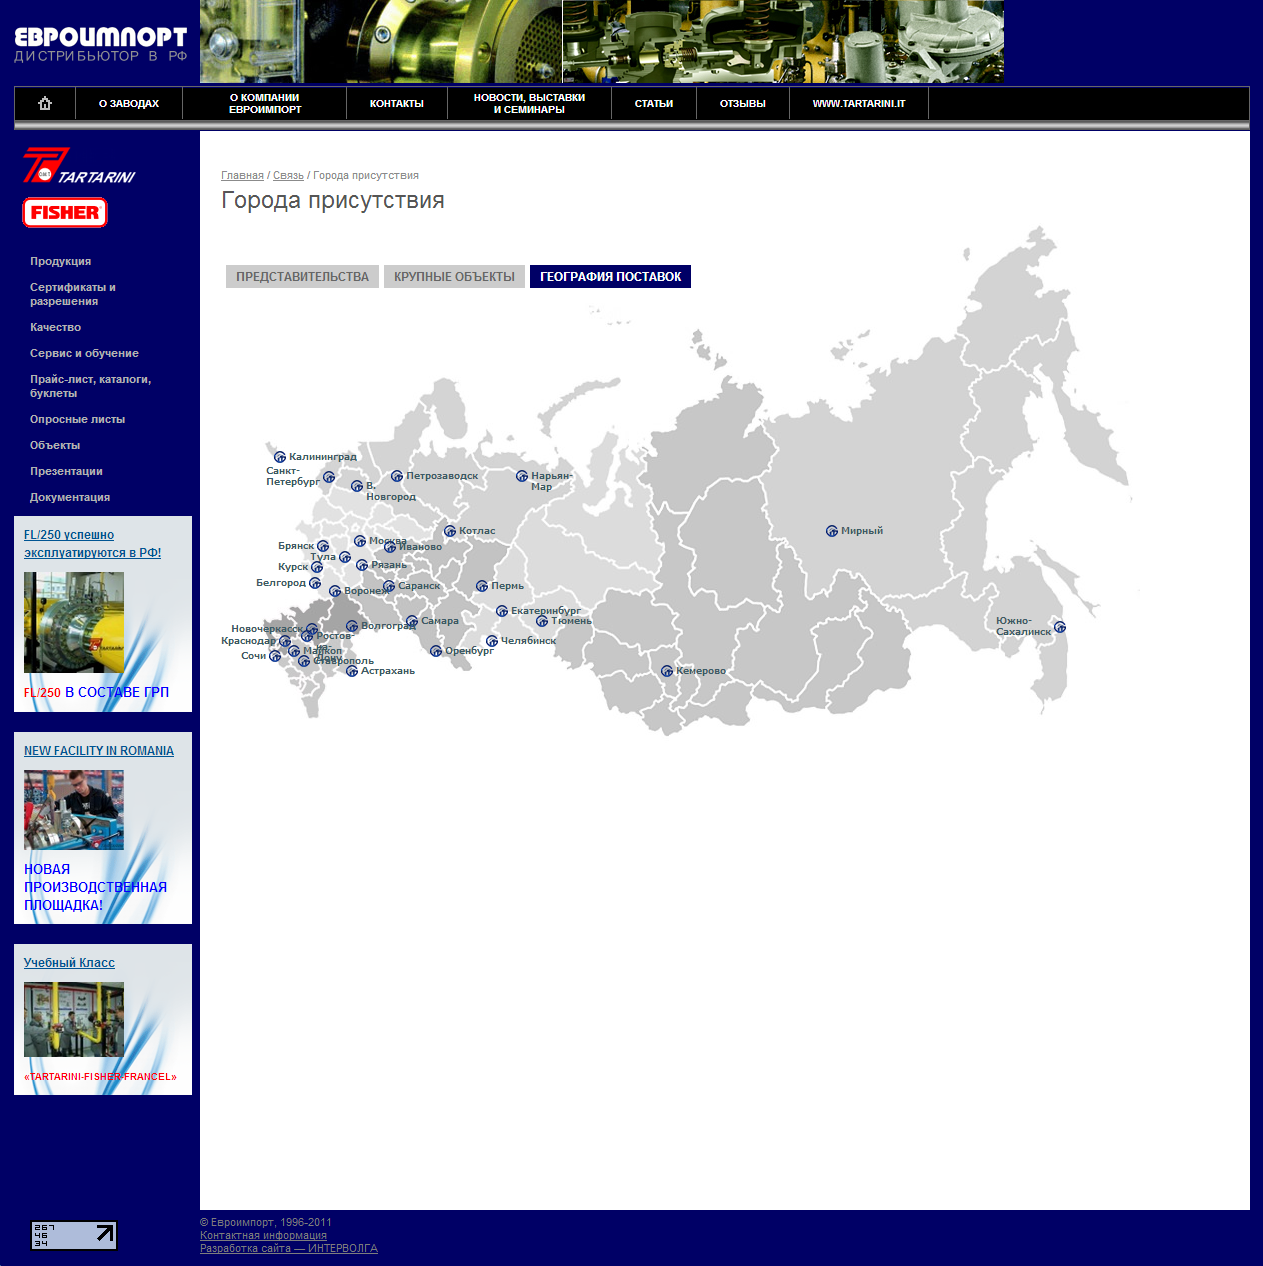 сайт компании ооо «евроимпорт»